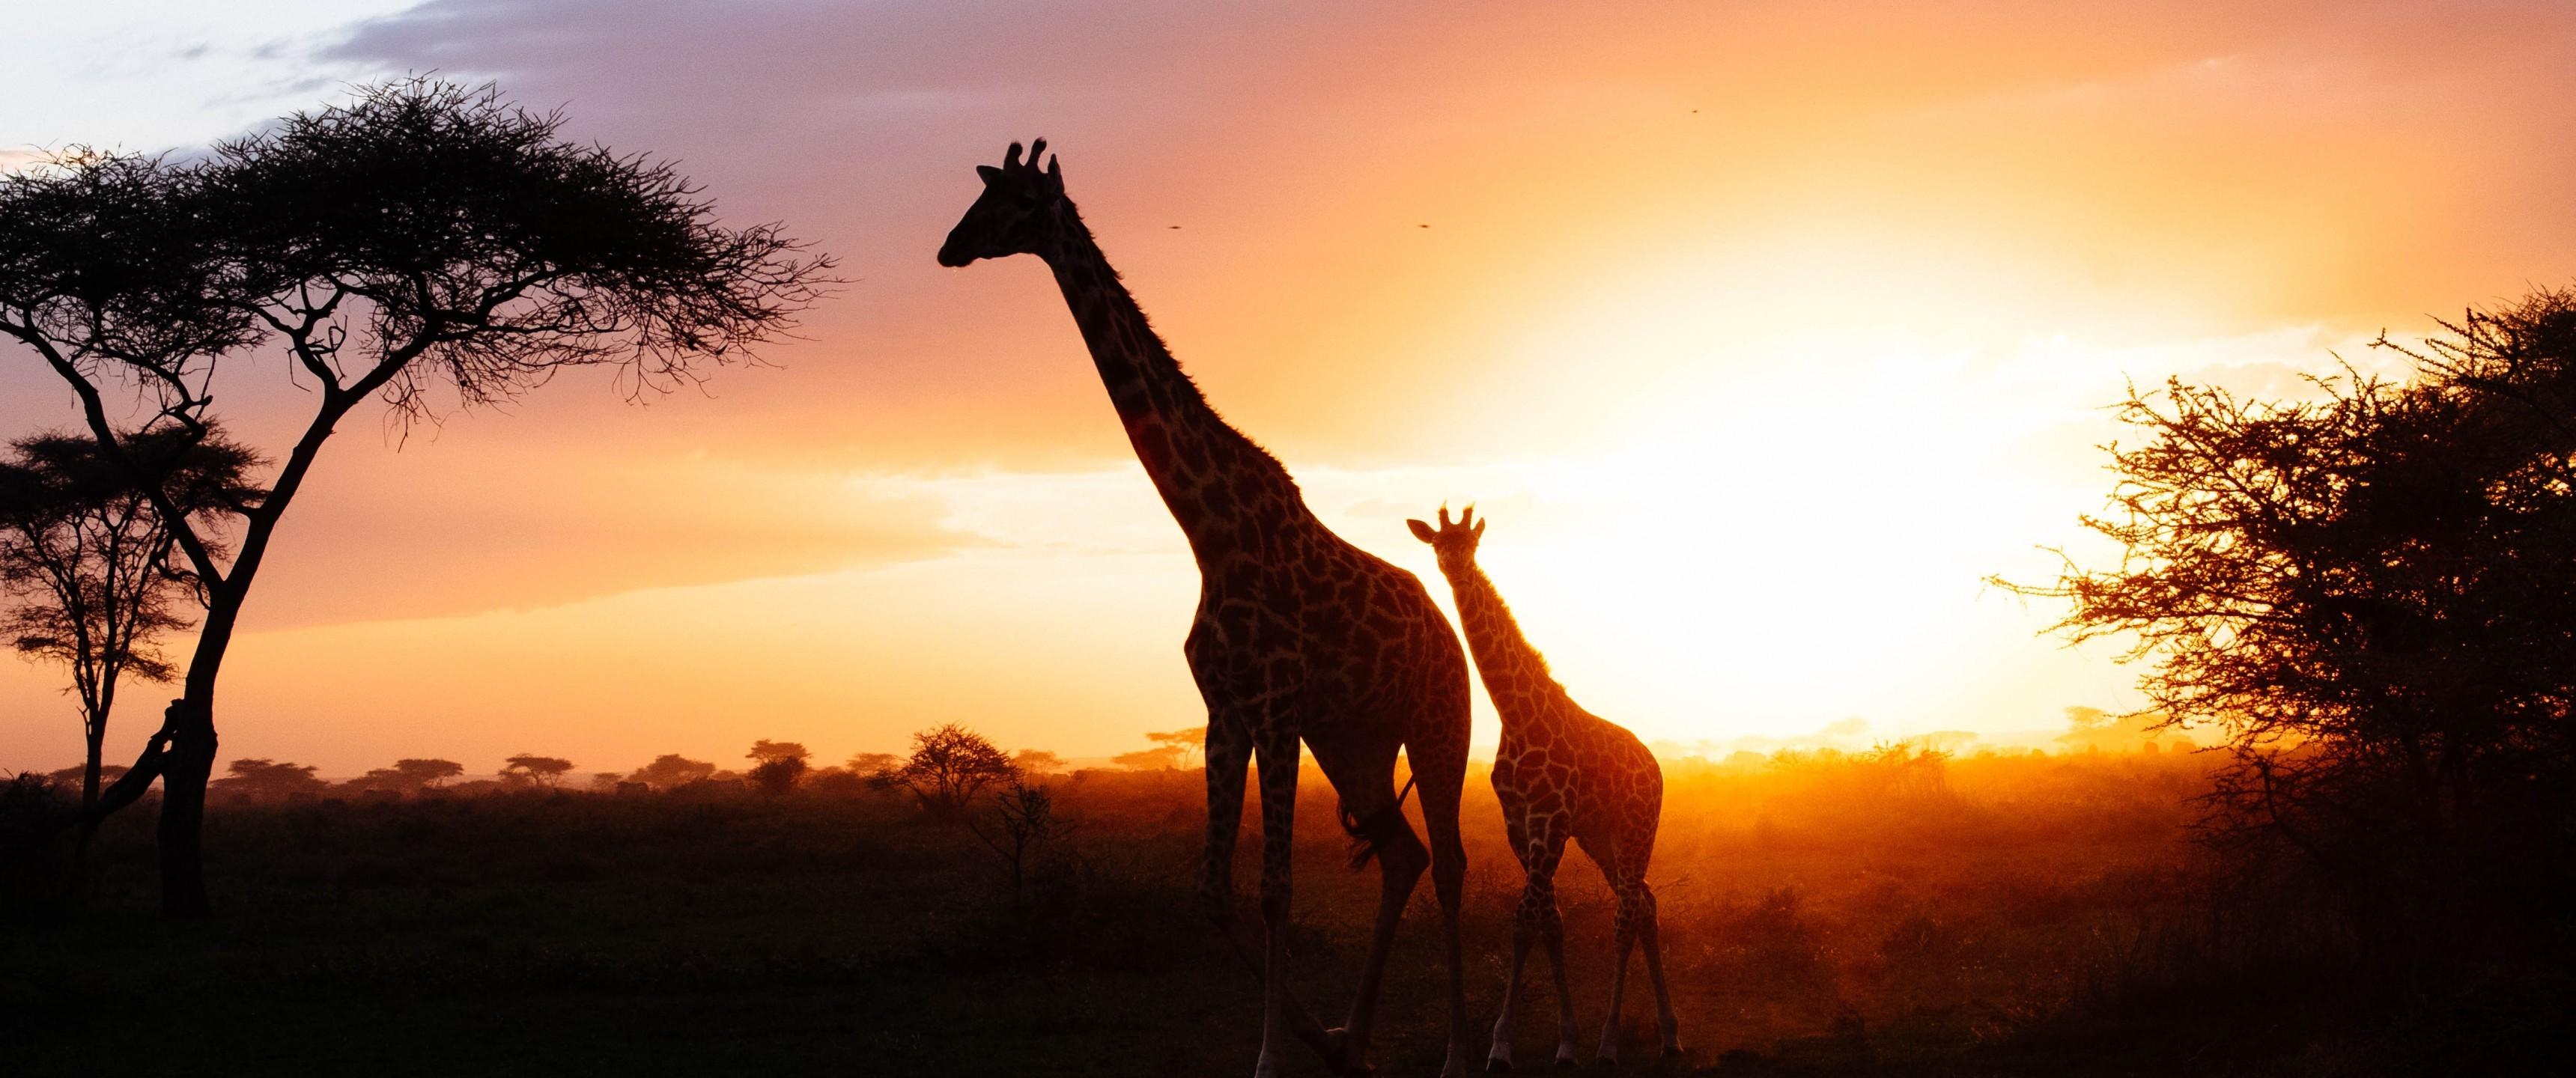 Download 3440x1440 Giraffe Family, Sunset, Trees, Field